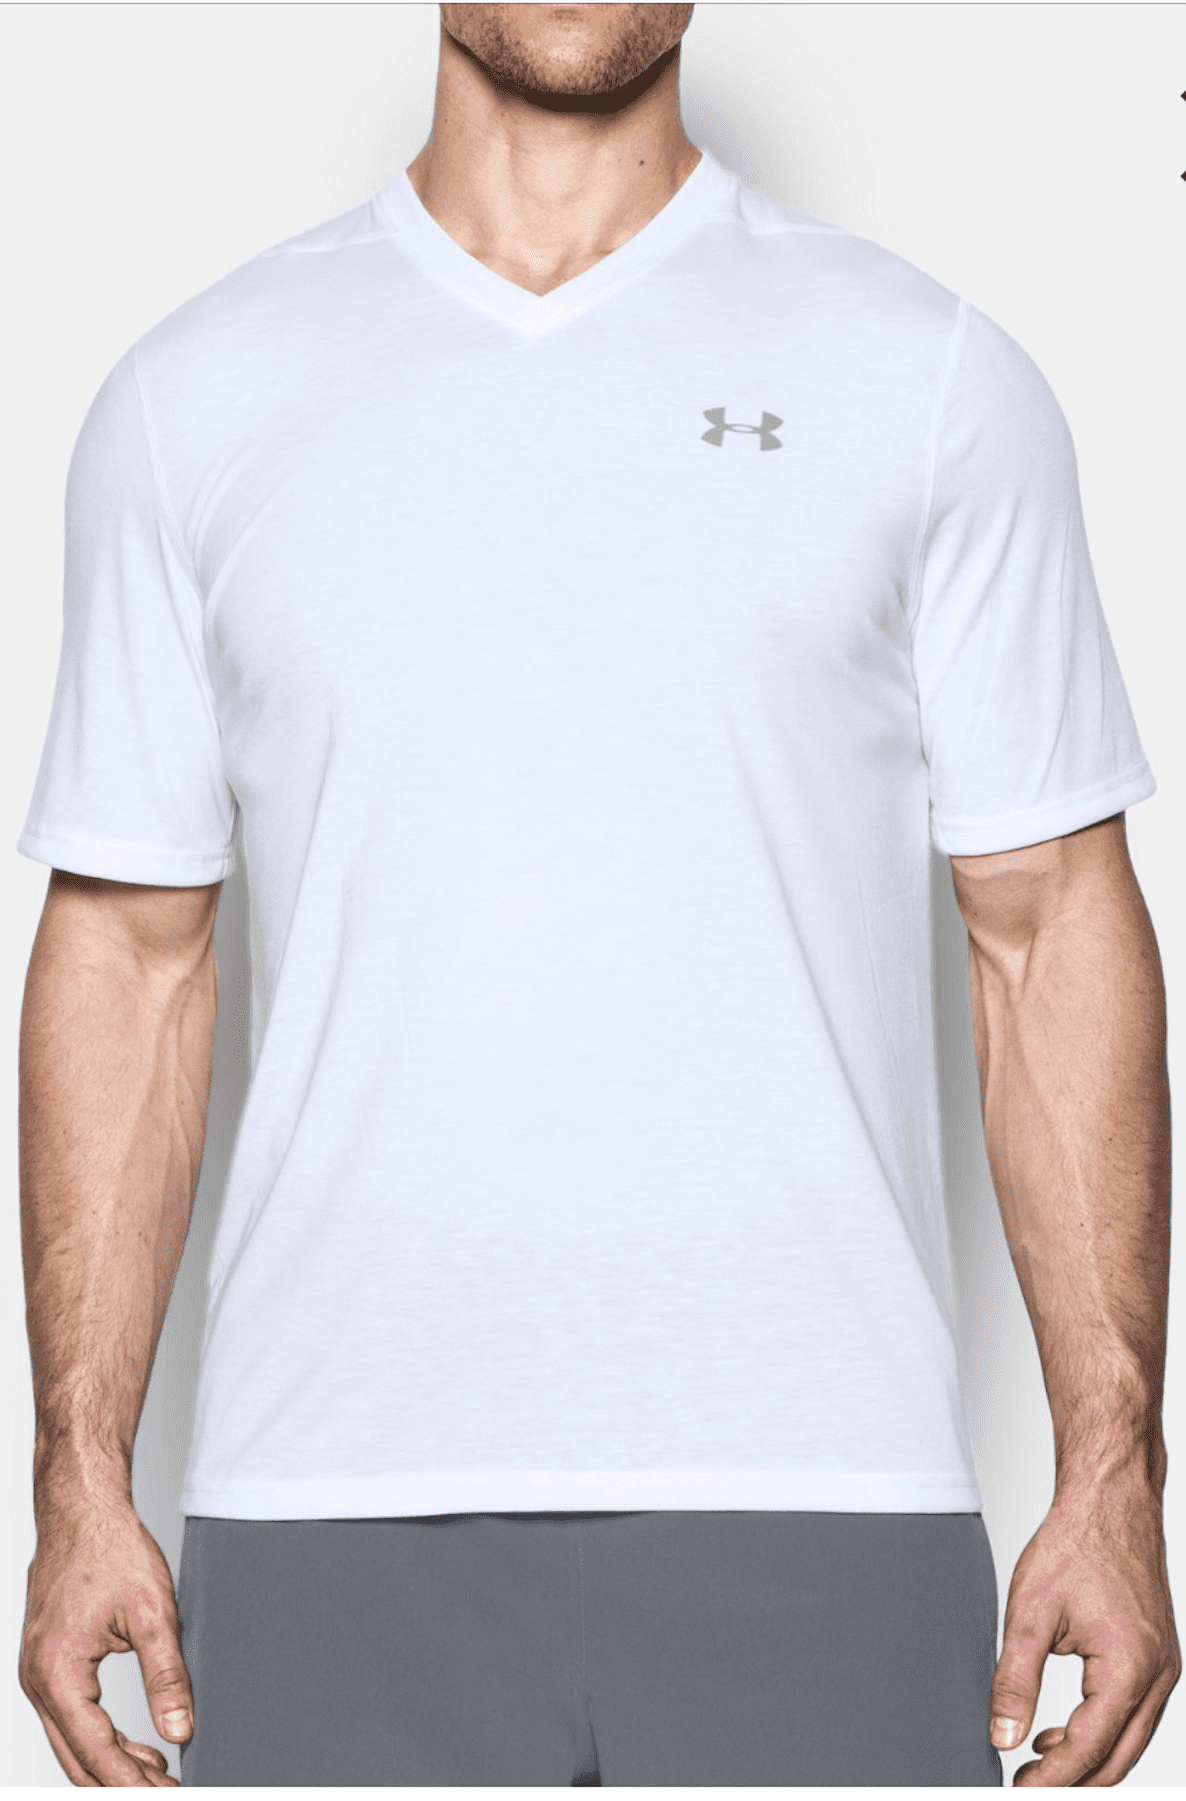 Leggen Sleutel Wereldrecord Guinness Book Under Armour Lightweight Loose Fit Short Sleeve T-shirts in All Styles -  Walmart.com